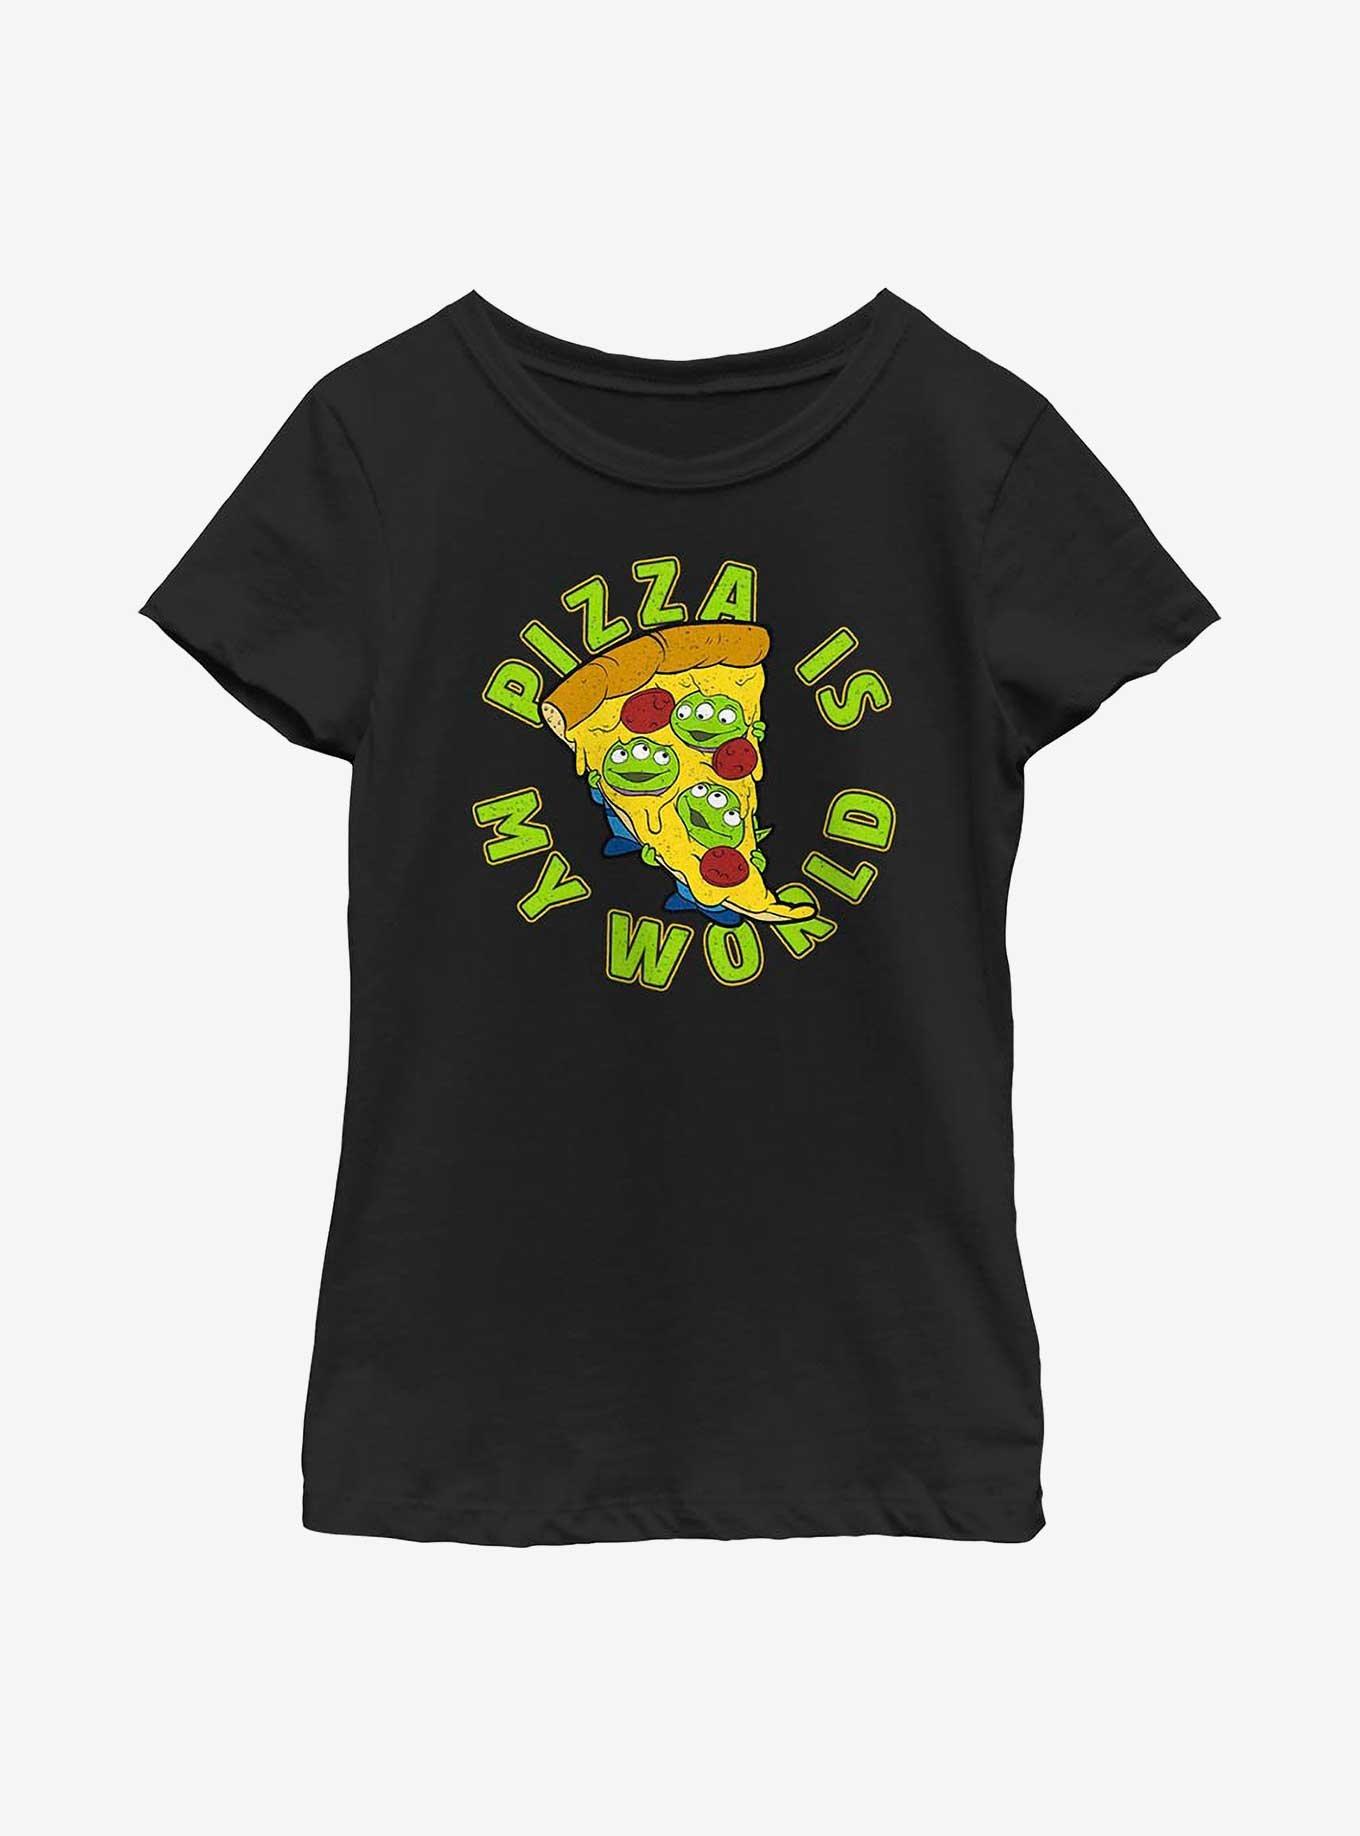 Disney Pixar Toy Story Pizza Is My World Youth Girls T-Shirt, BLACK, hi-res